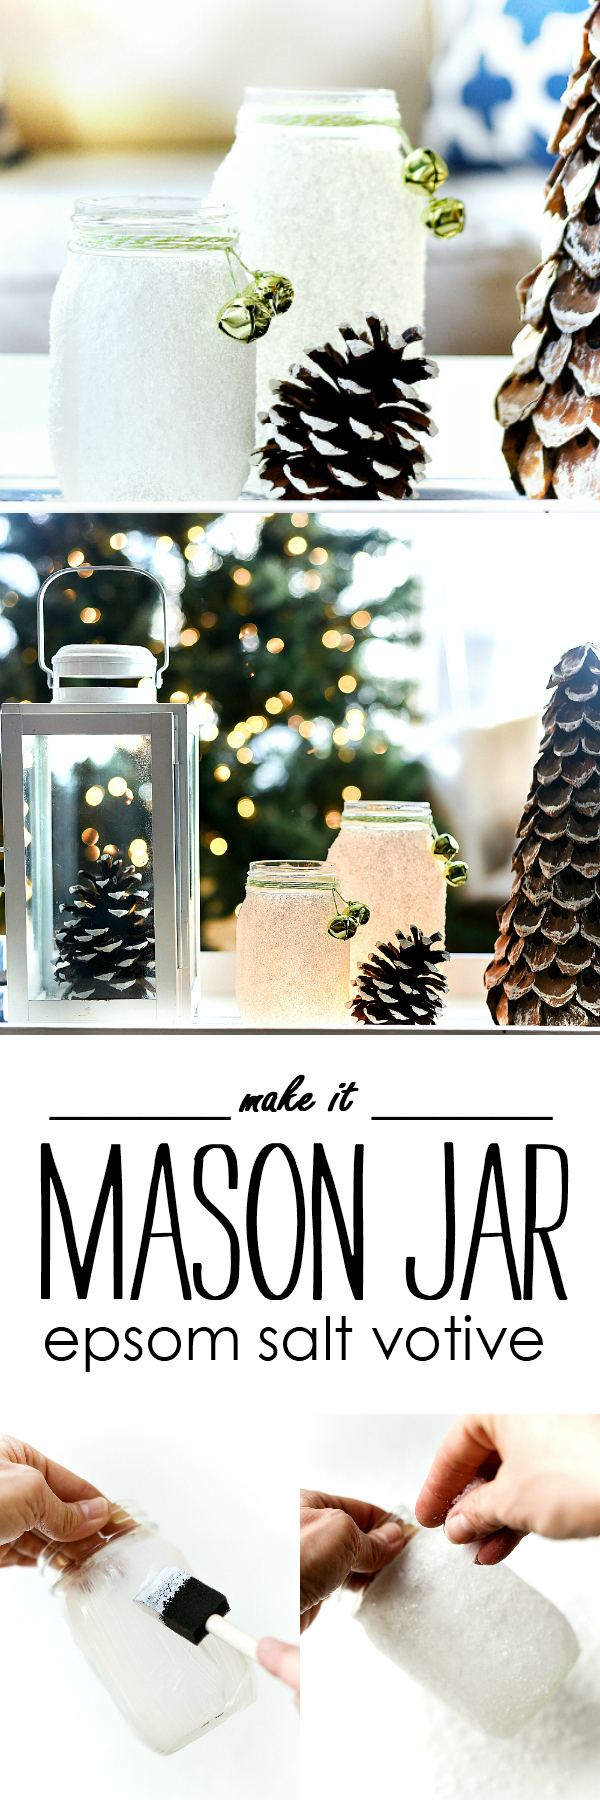 Epsom Salt Holiday Mason Jar - Mason Jar Holiday Crafts - Mason Jar Christmas Crafts